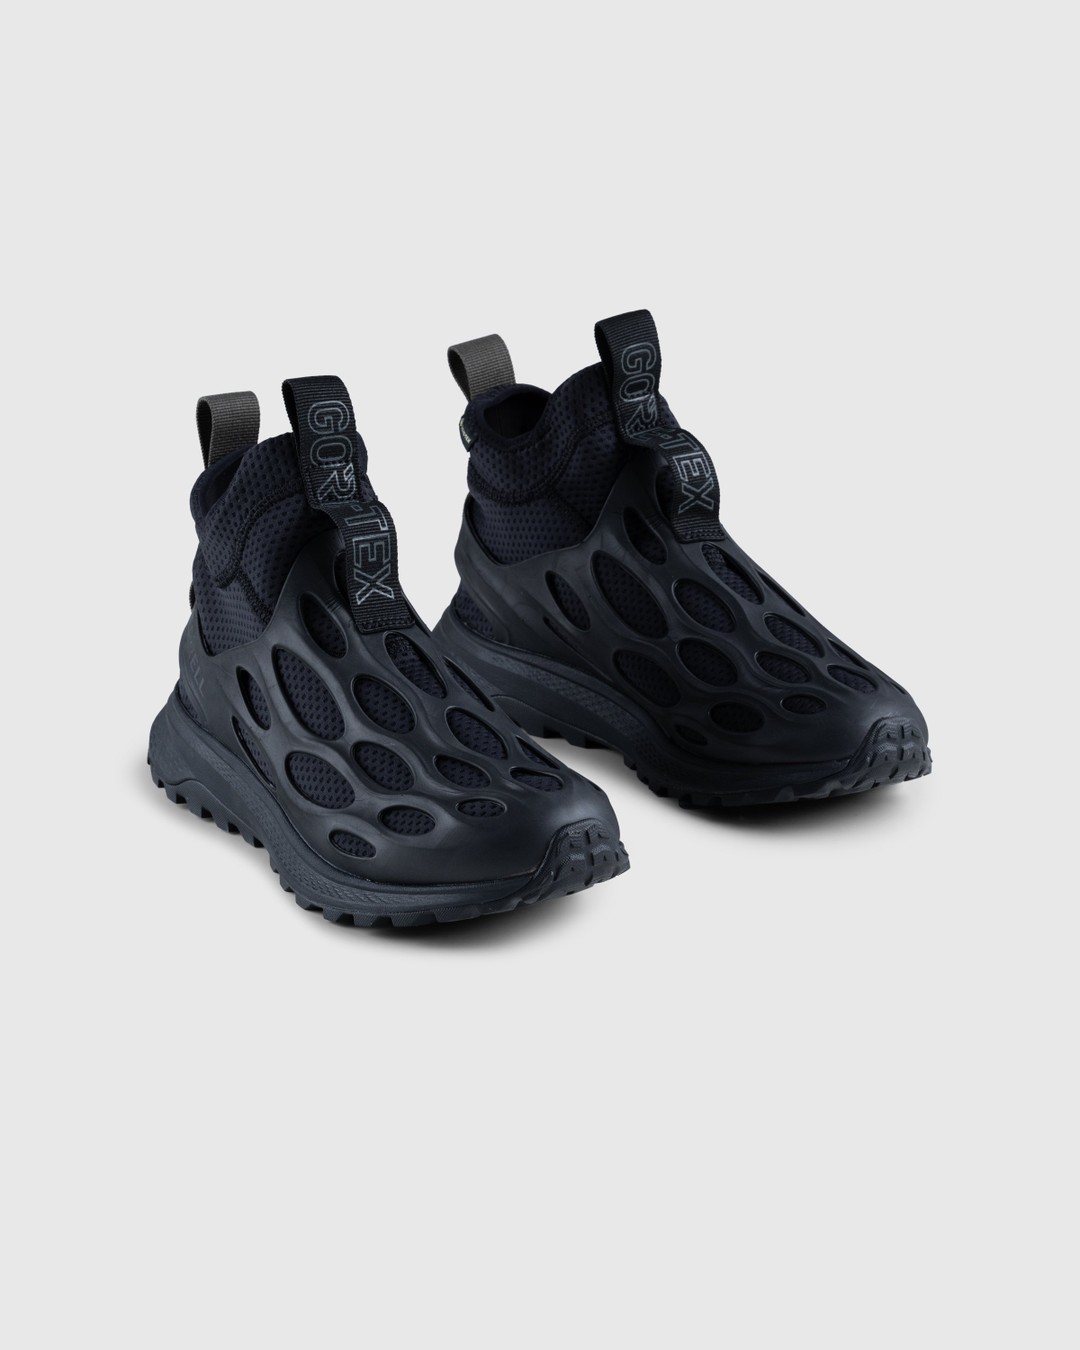 Merrell – Hydro Runner Mid GTX Black  - Sneakers - Black - Image 3